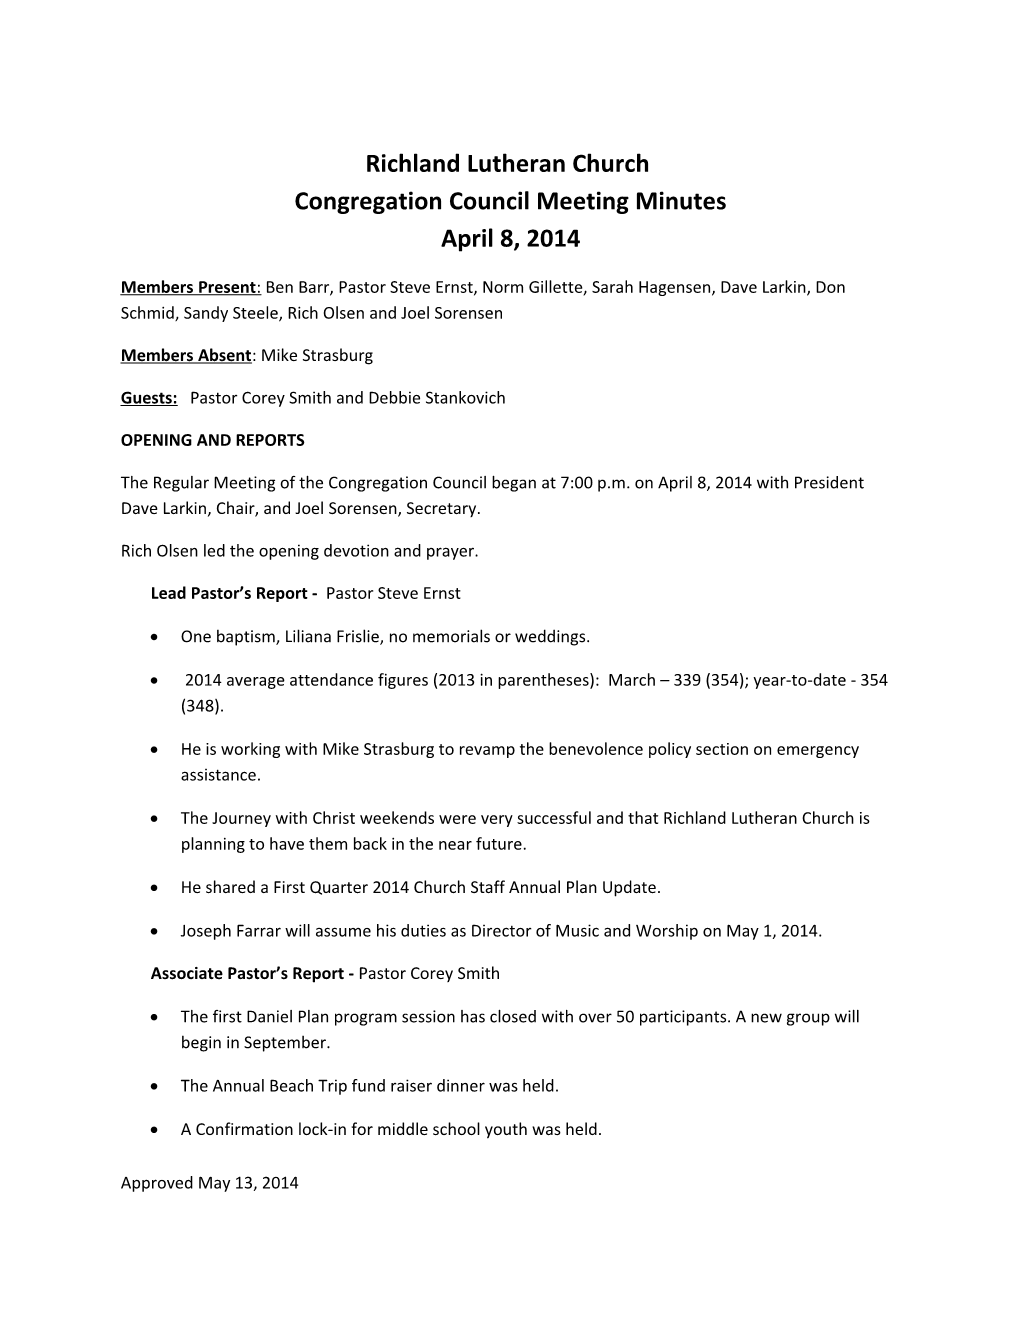 Congregation Council Meeting Minutes